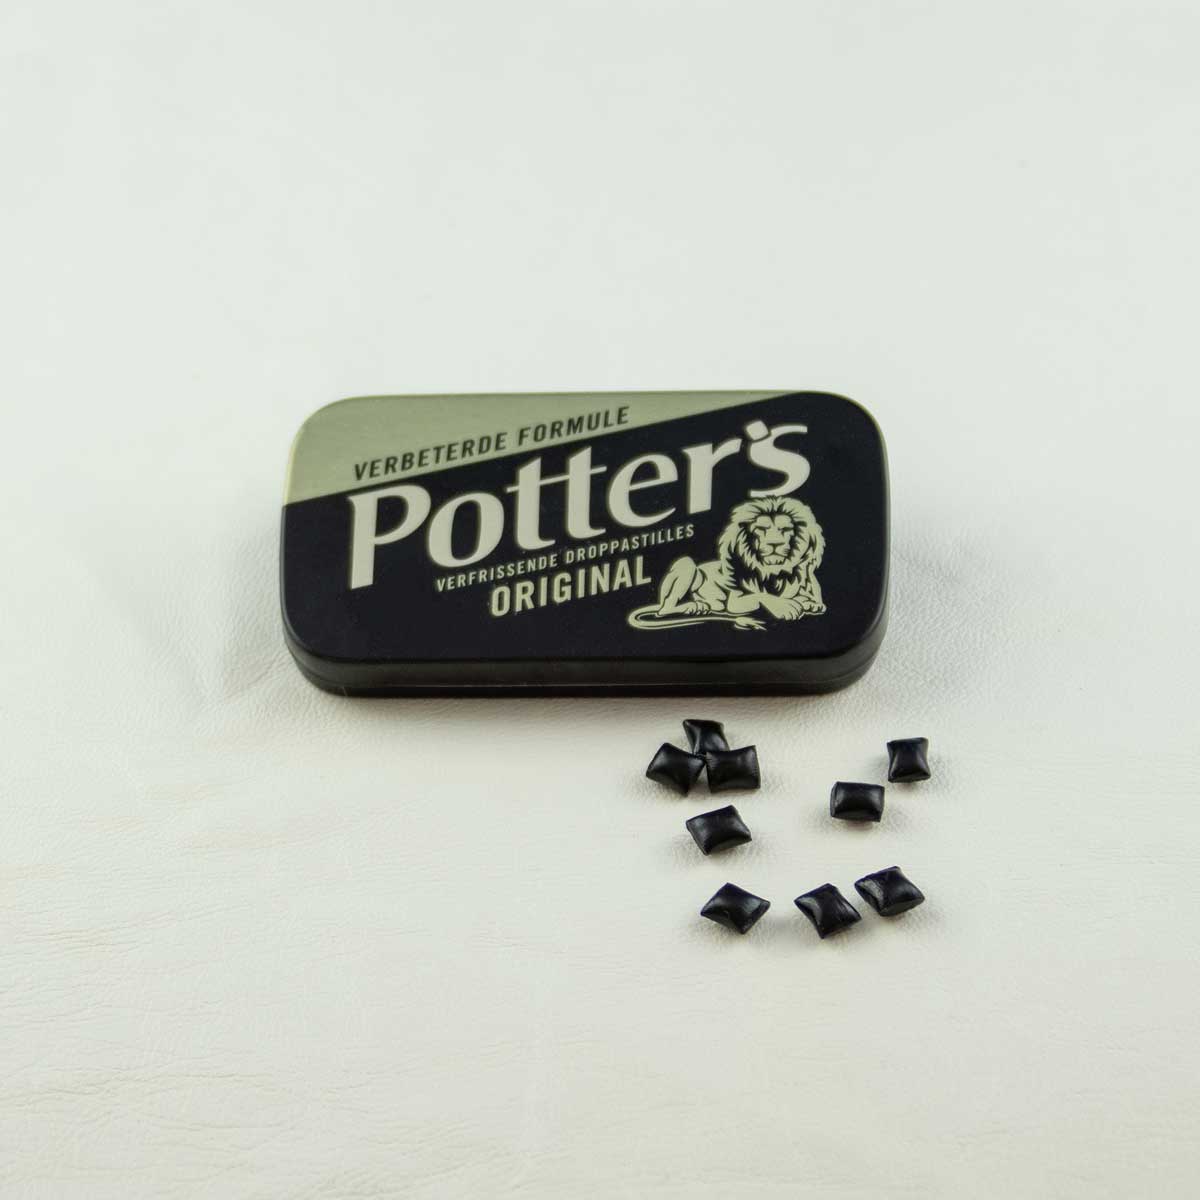 Potters Original 12,5g